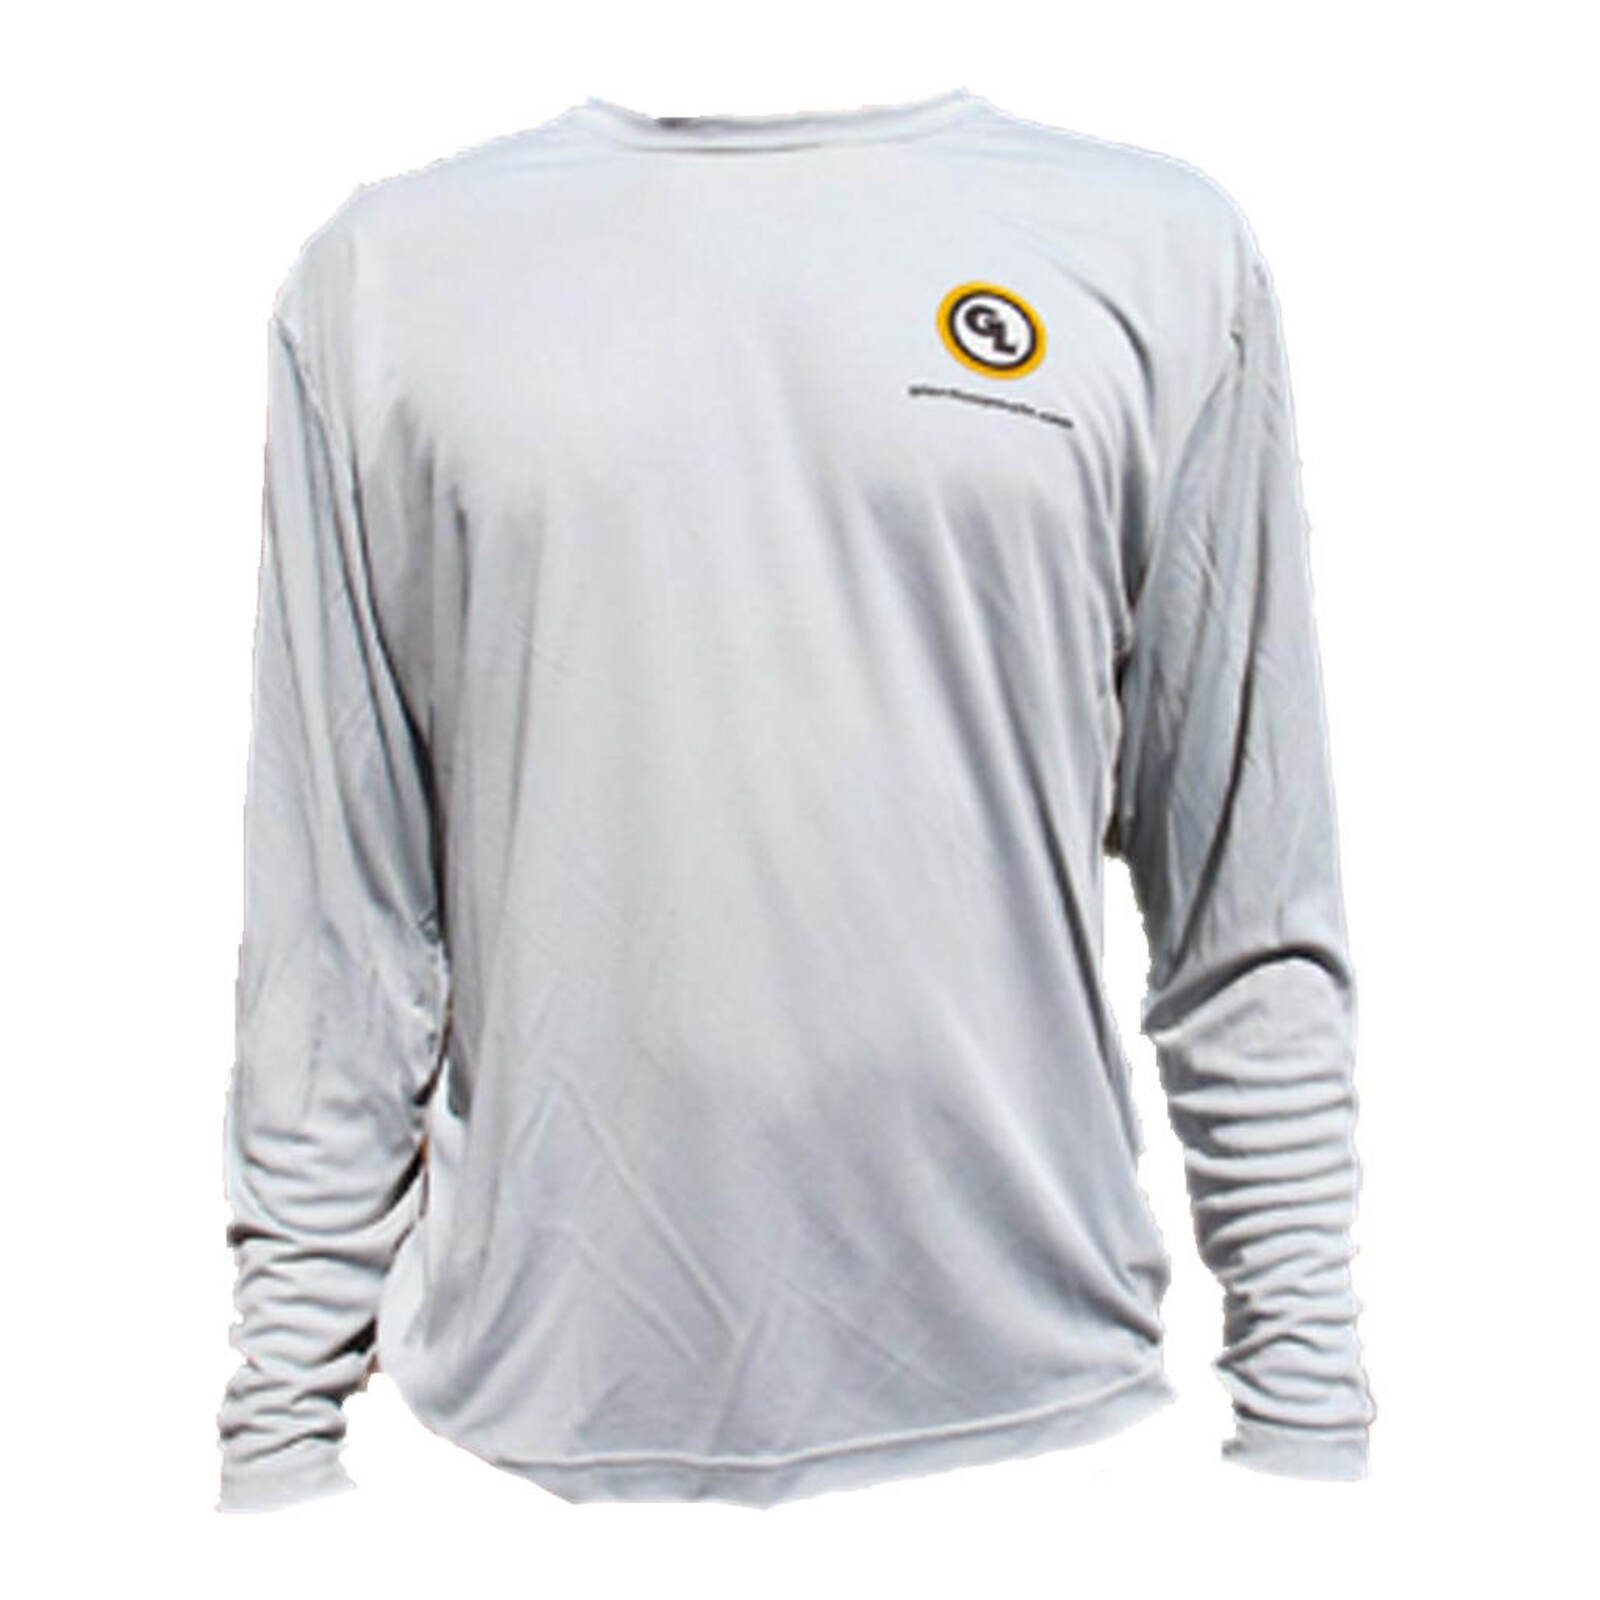 Giant Loop Tech Long Sleeve Shirt - Grey (2XL)